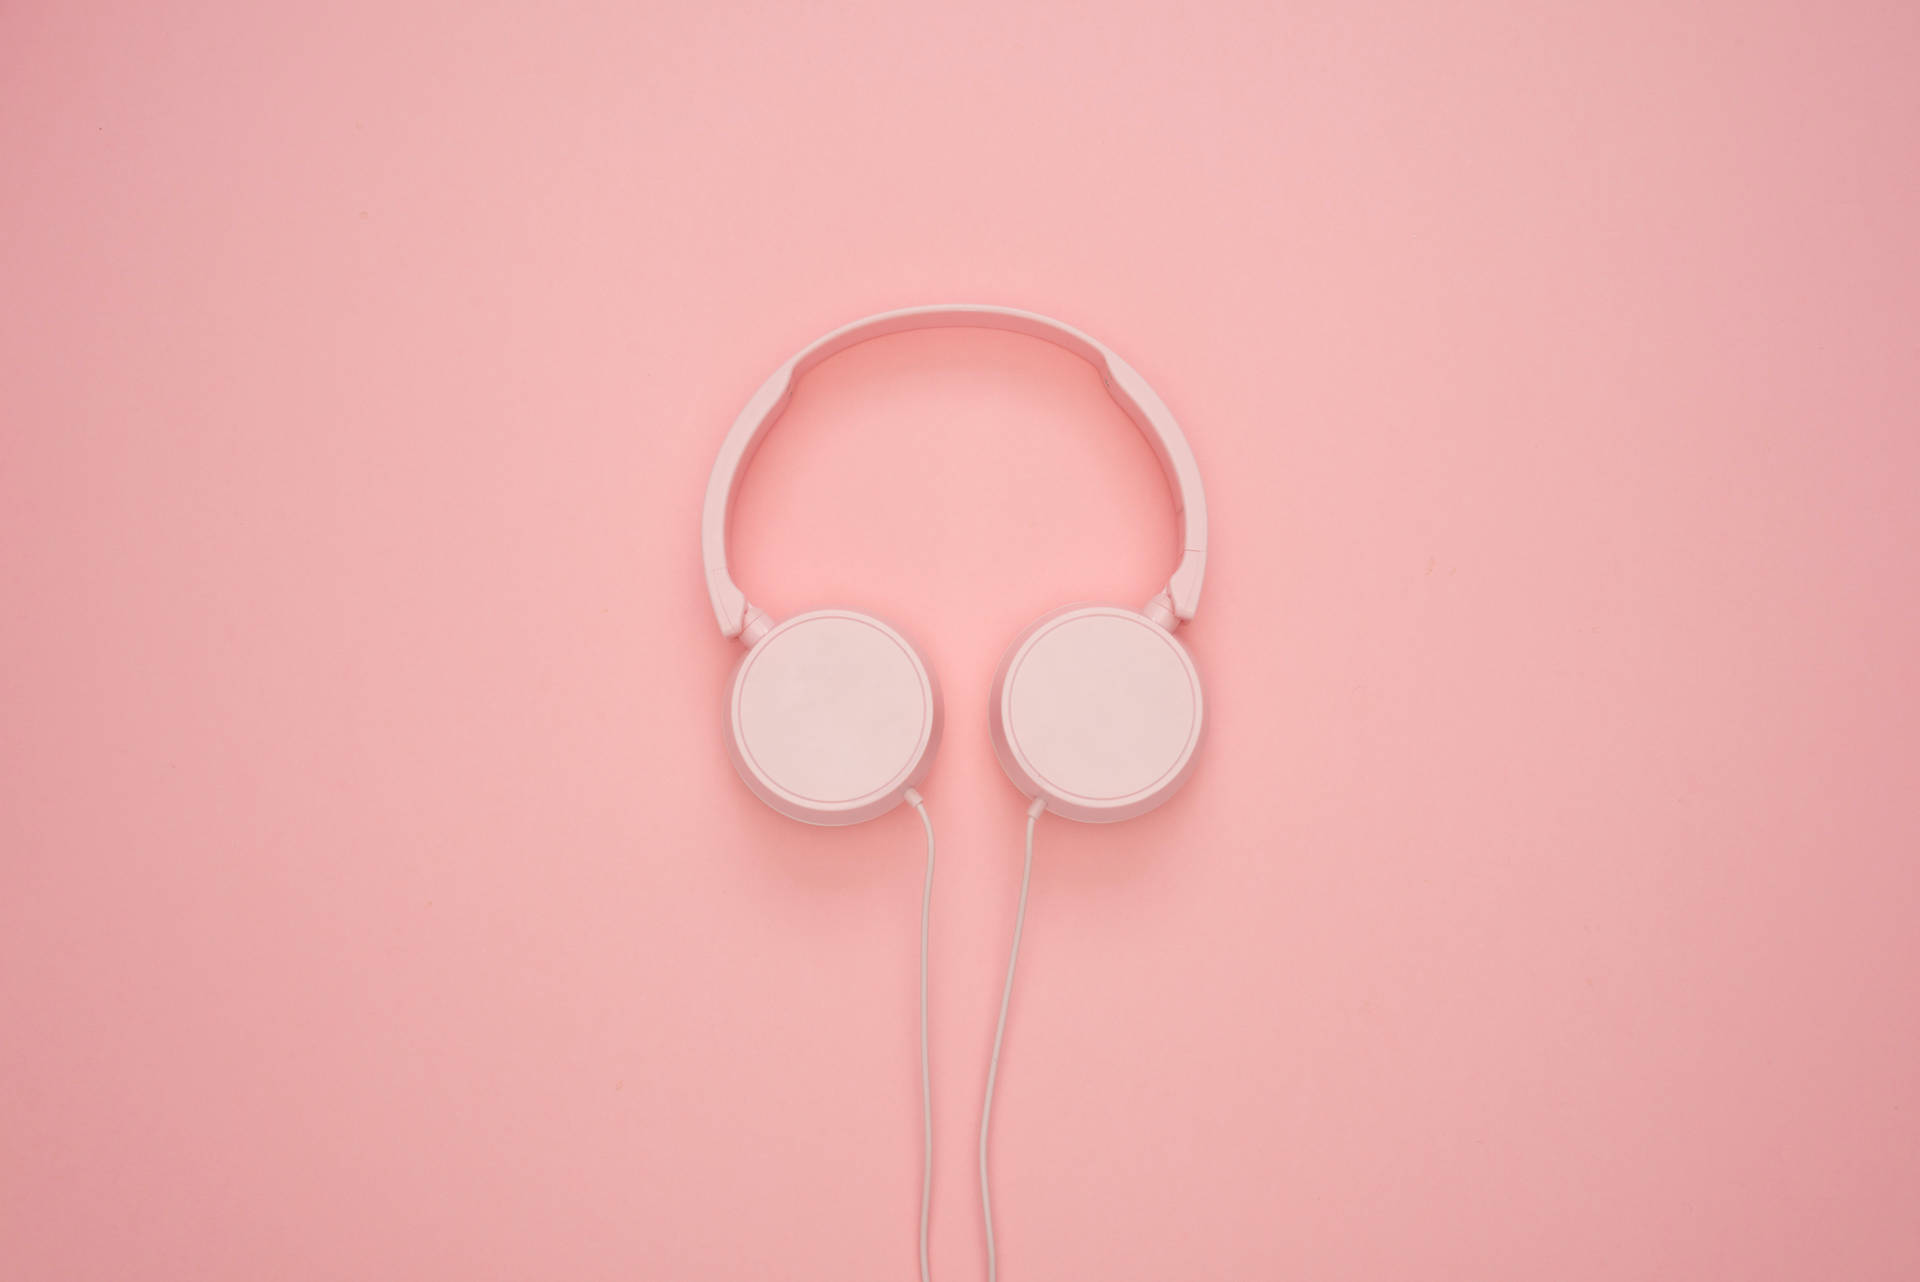 4k Tablet Pink Headphones Background